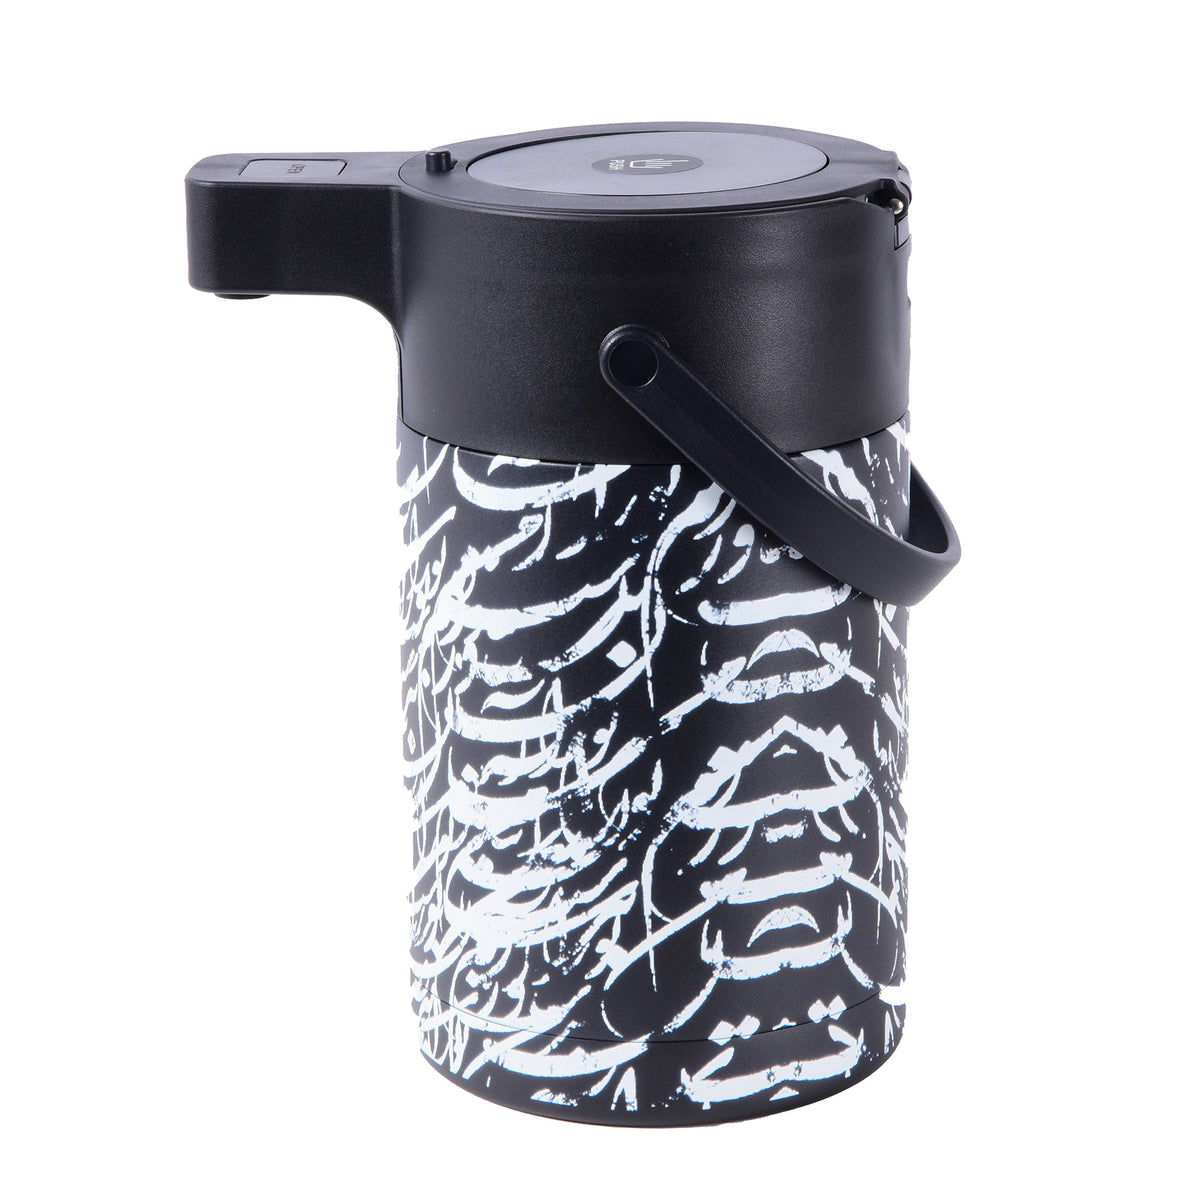 Zwarah Air Pot Flask 2.5 liters Black Color